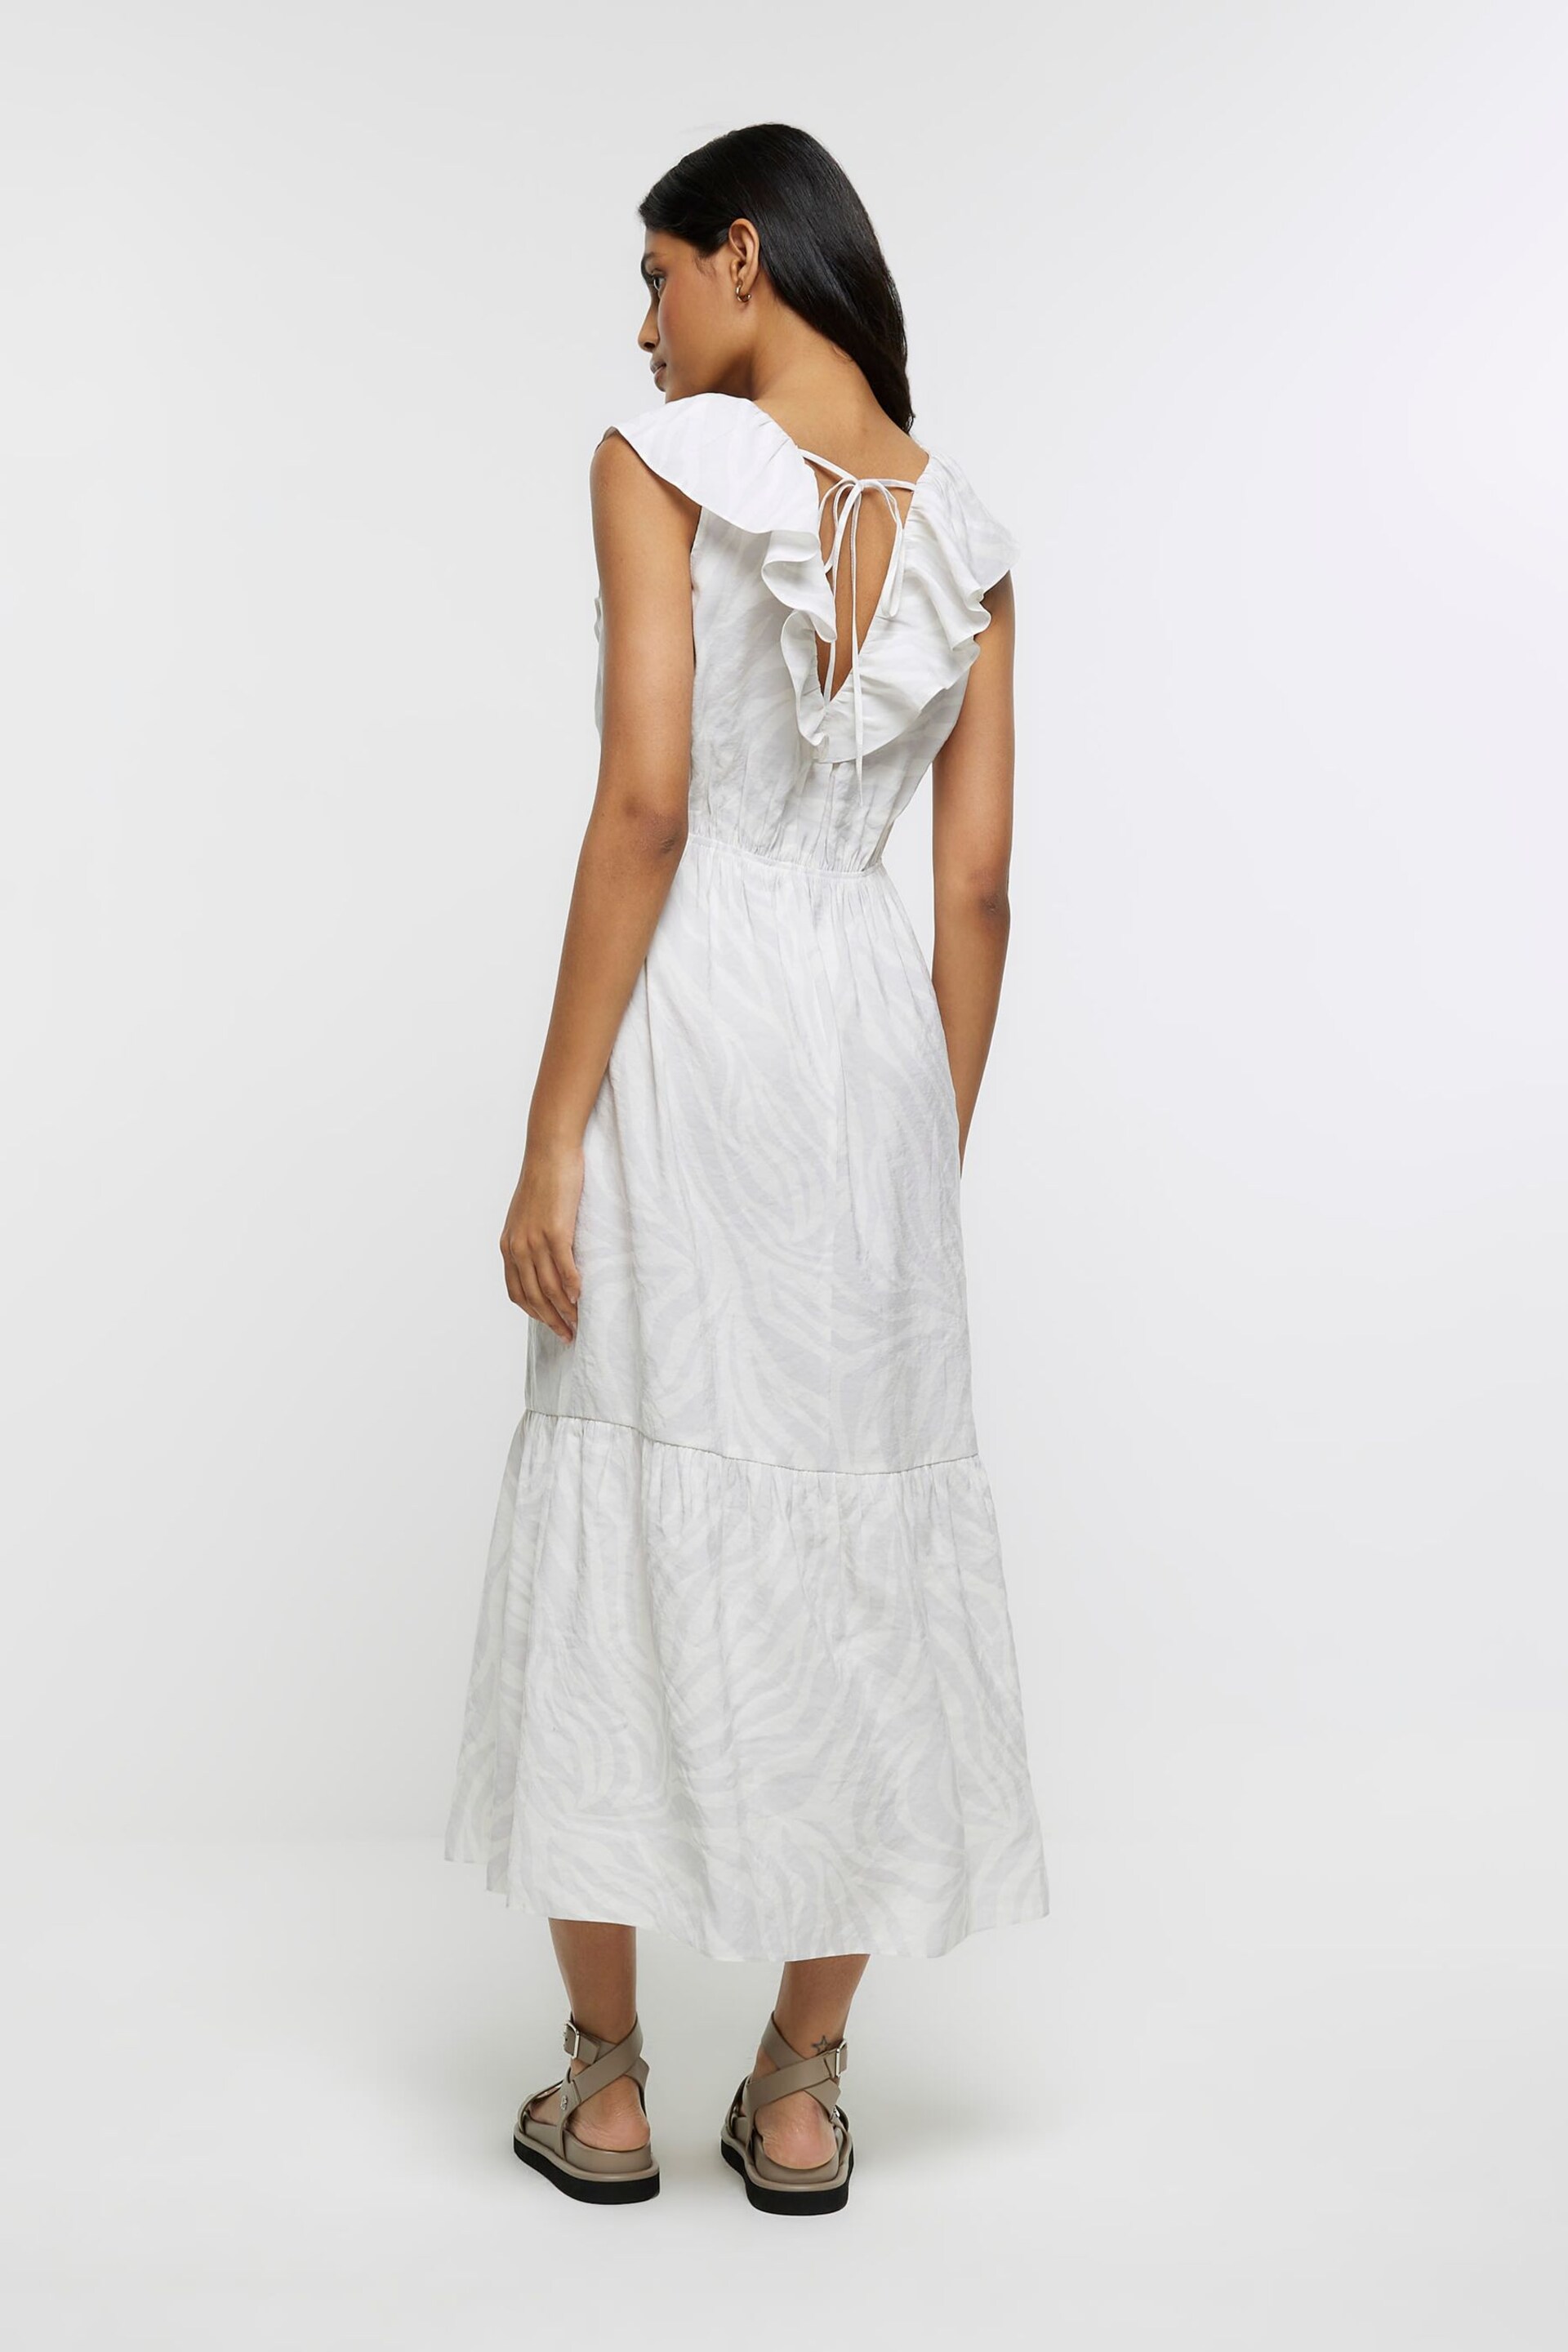 River Island Grey Printed V-Neck Frill Tea Dress - Image 2 of 4